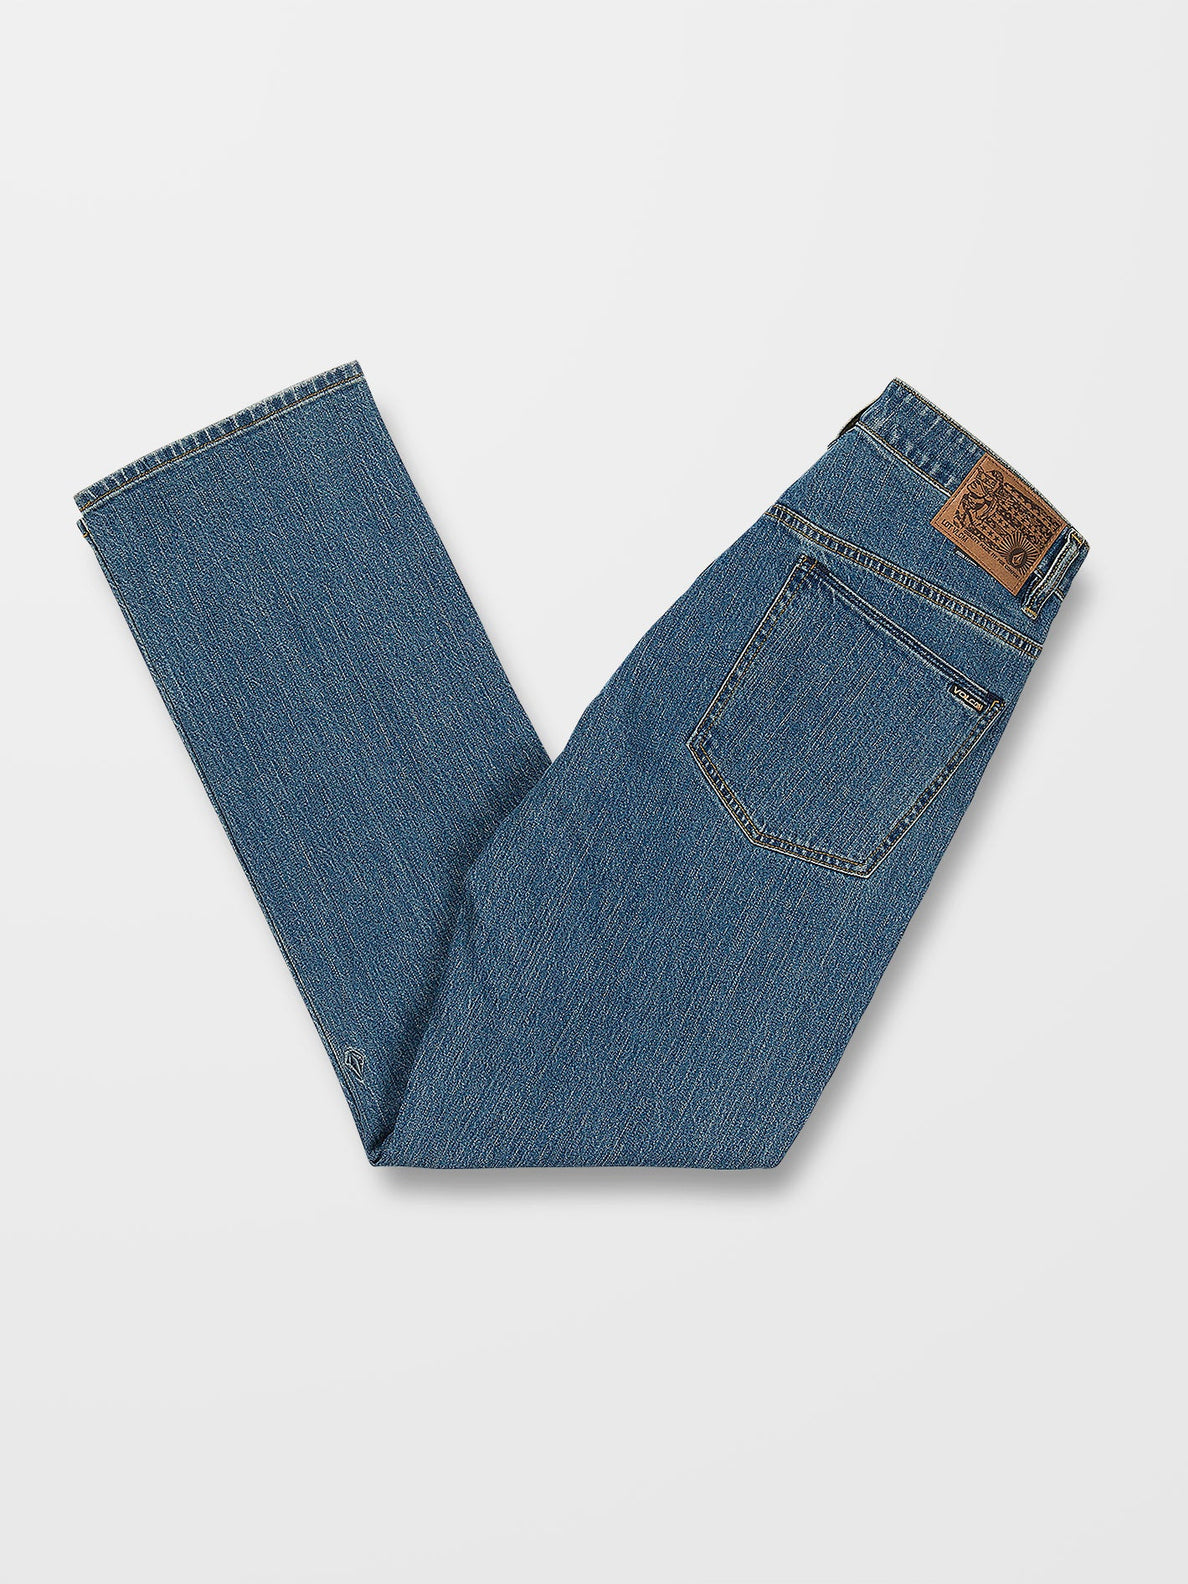 Volcom Solver Denim Jeans – Aged Indigo